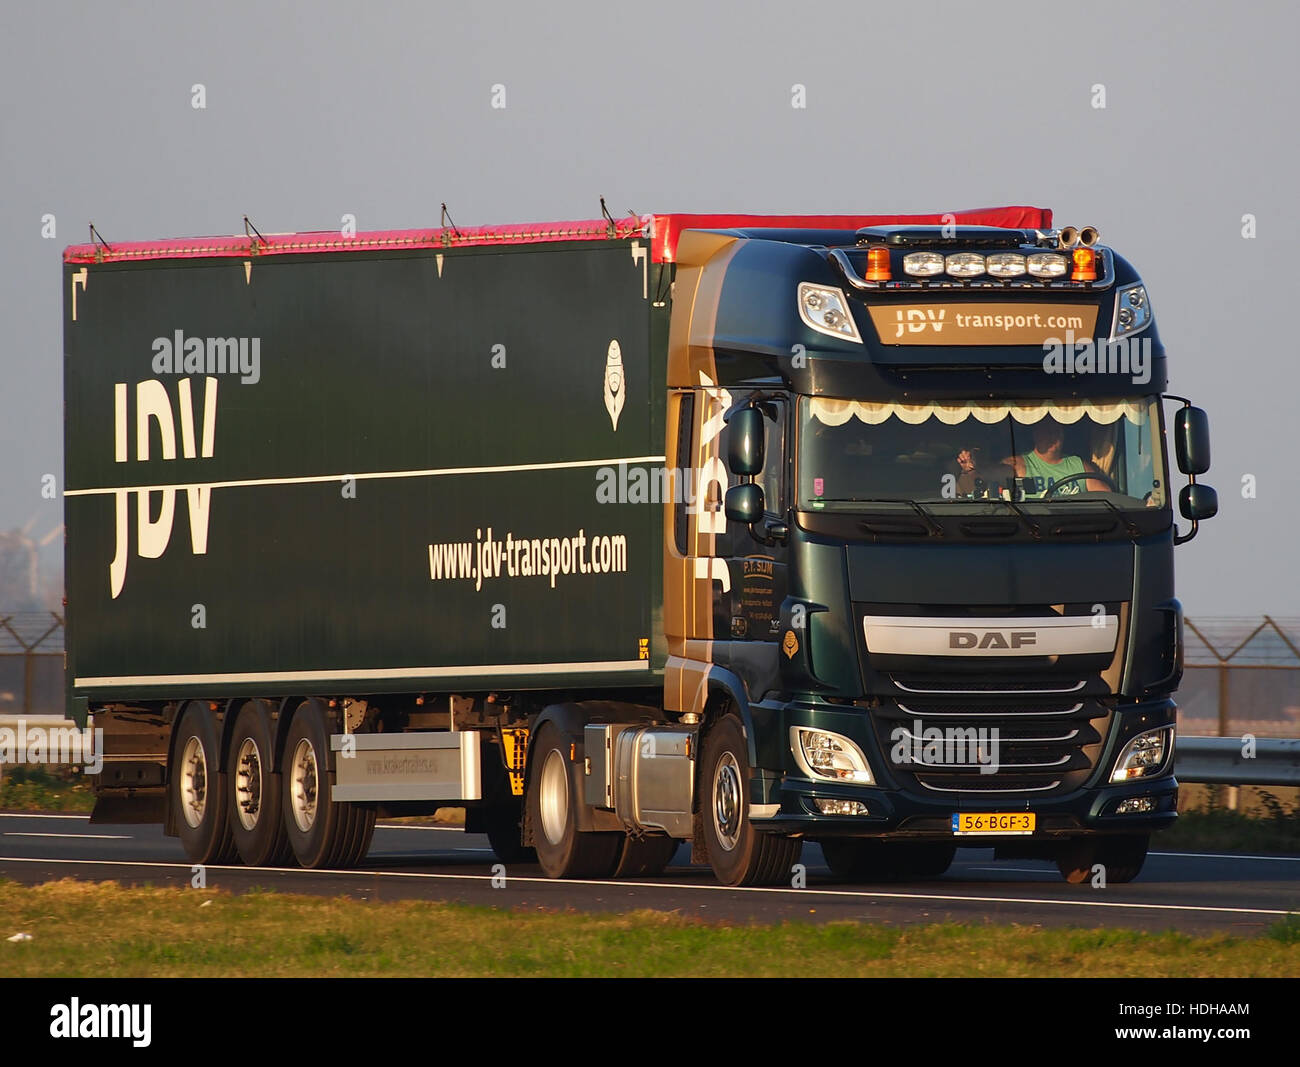 DAF truck, PT Sijm, JDV transport Stock Photo